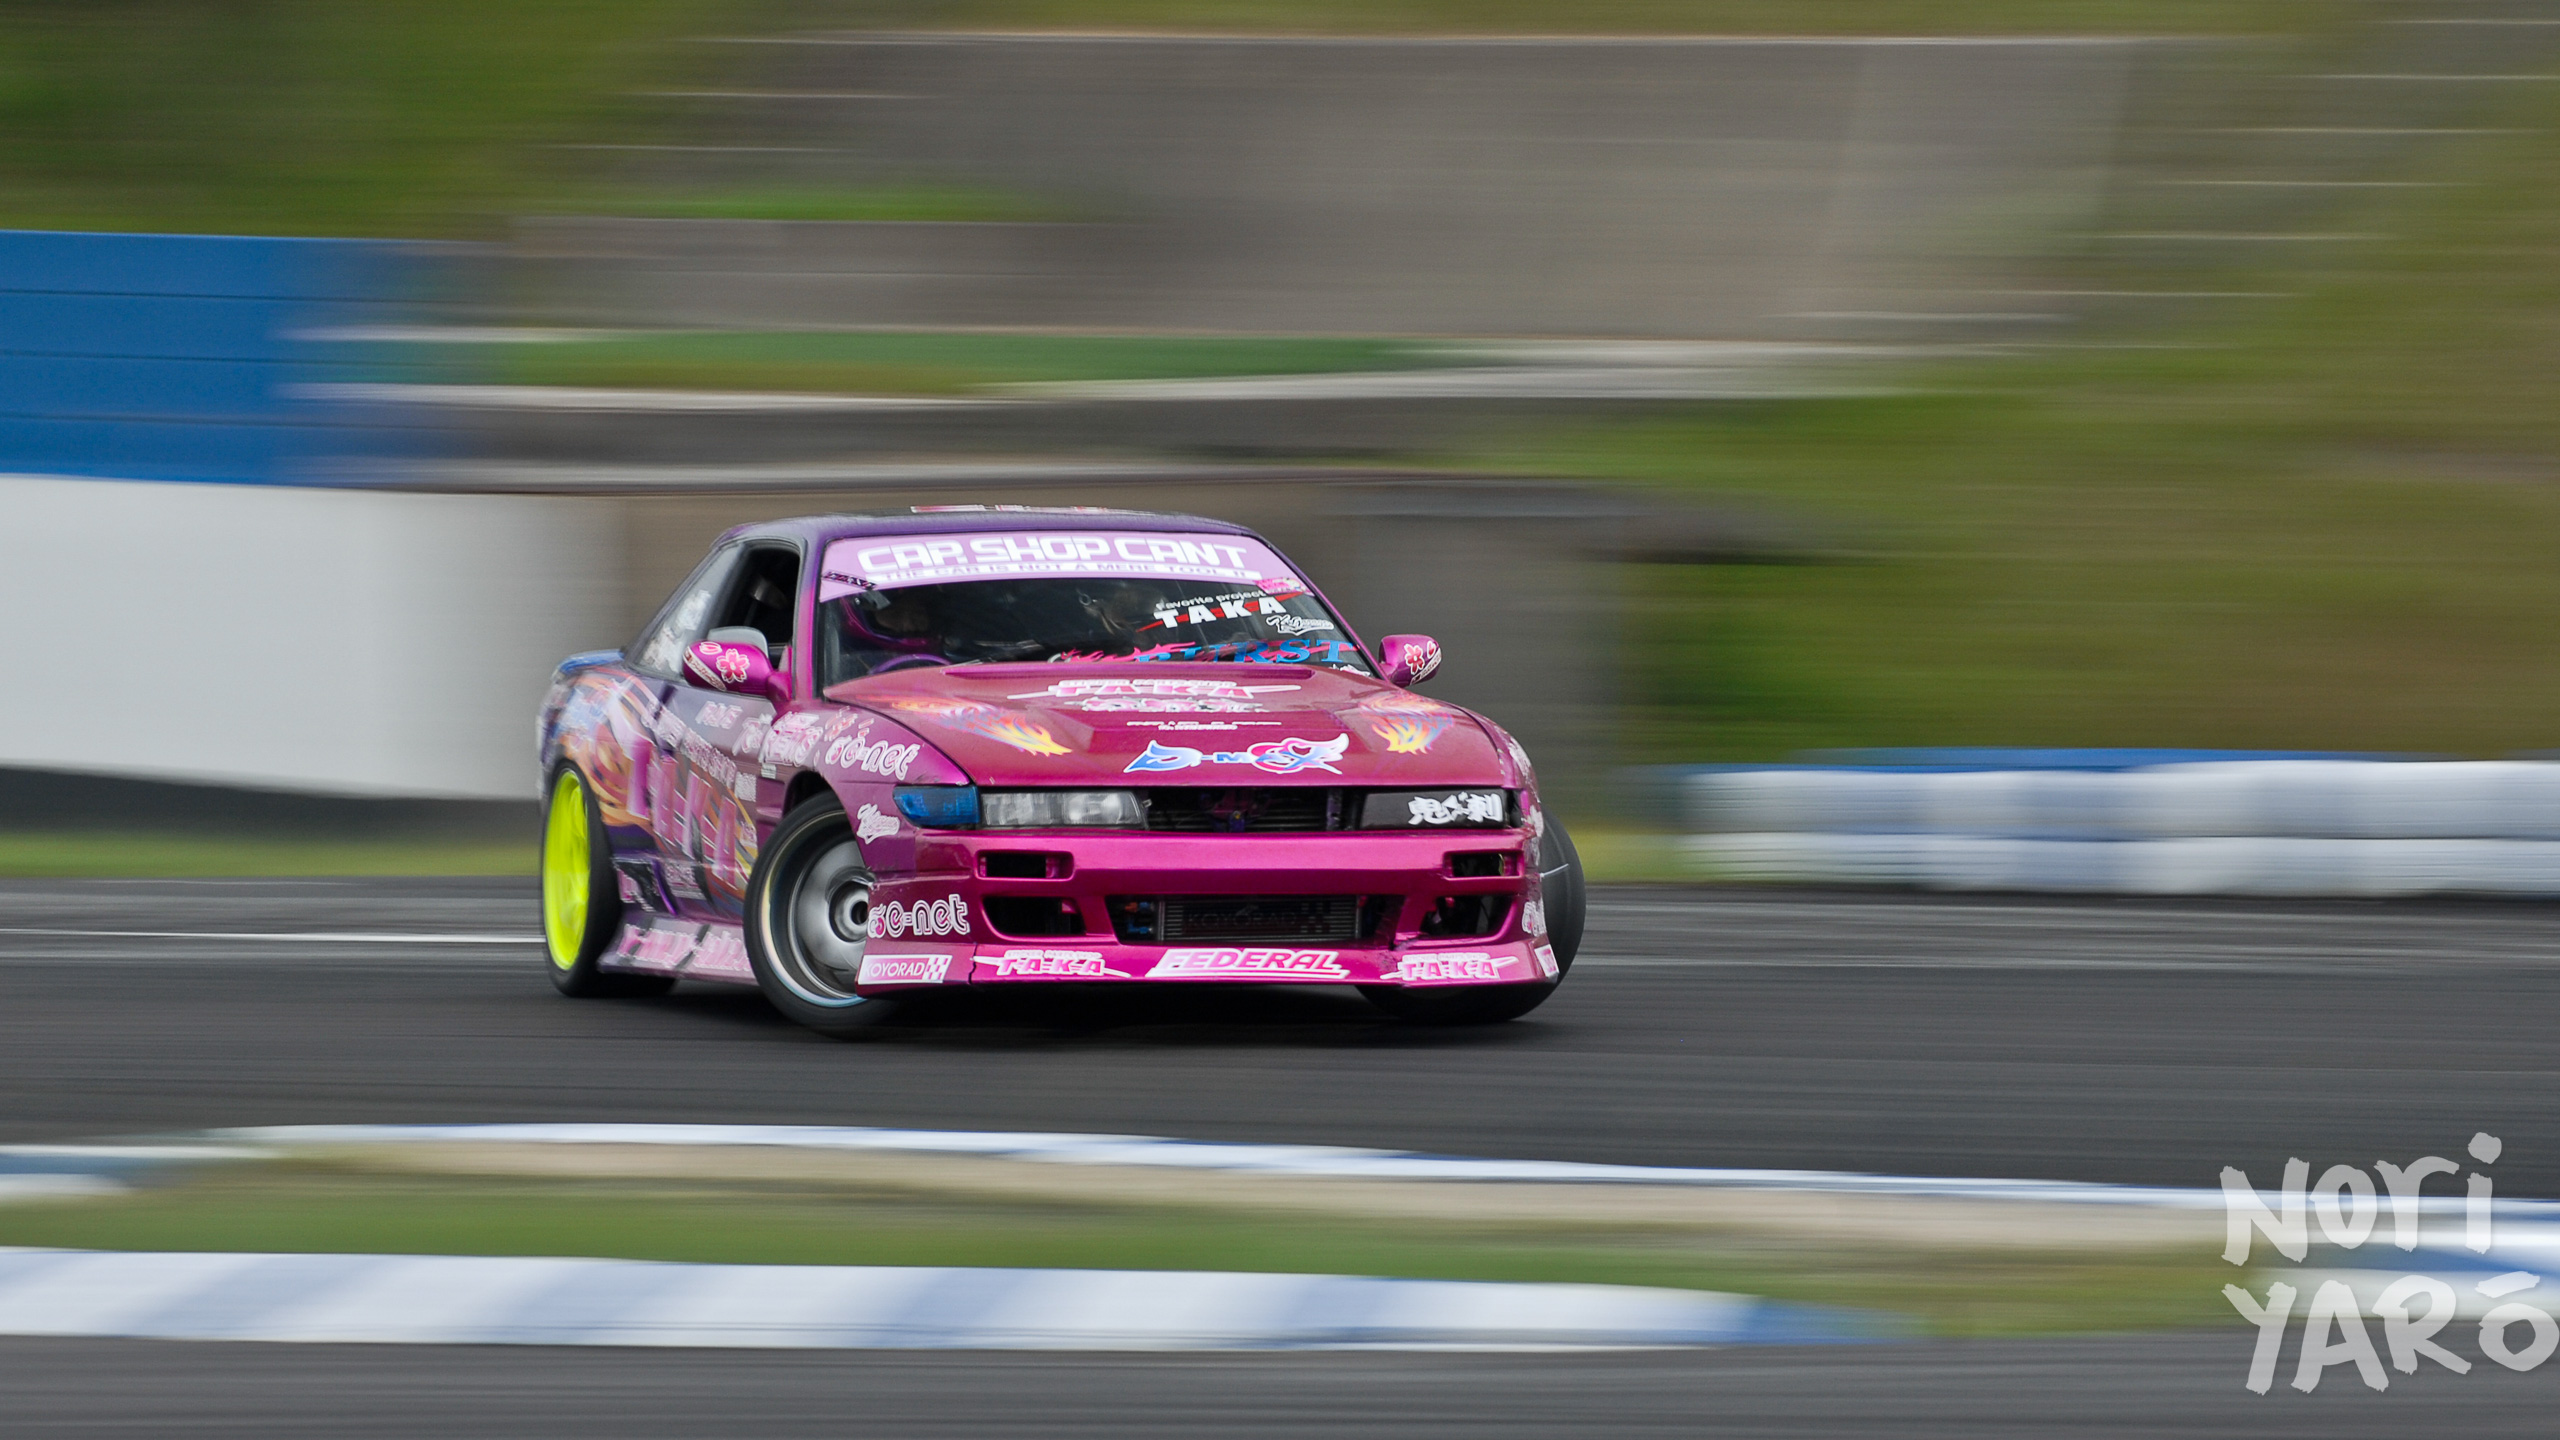 Car Japanese Cars Sports Car Drift Cars Drift Circuit Race Tracks Nissan S13 Purple Cars Pink Cars R 2560x1440